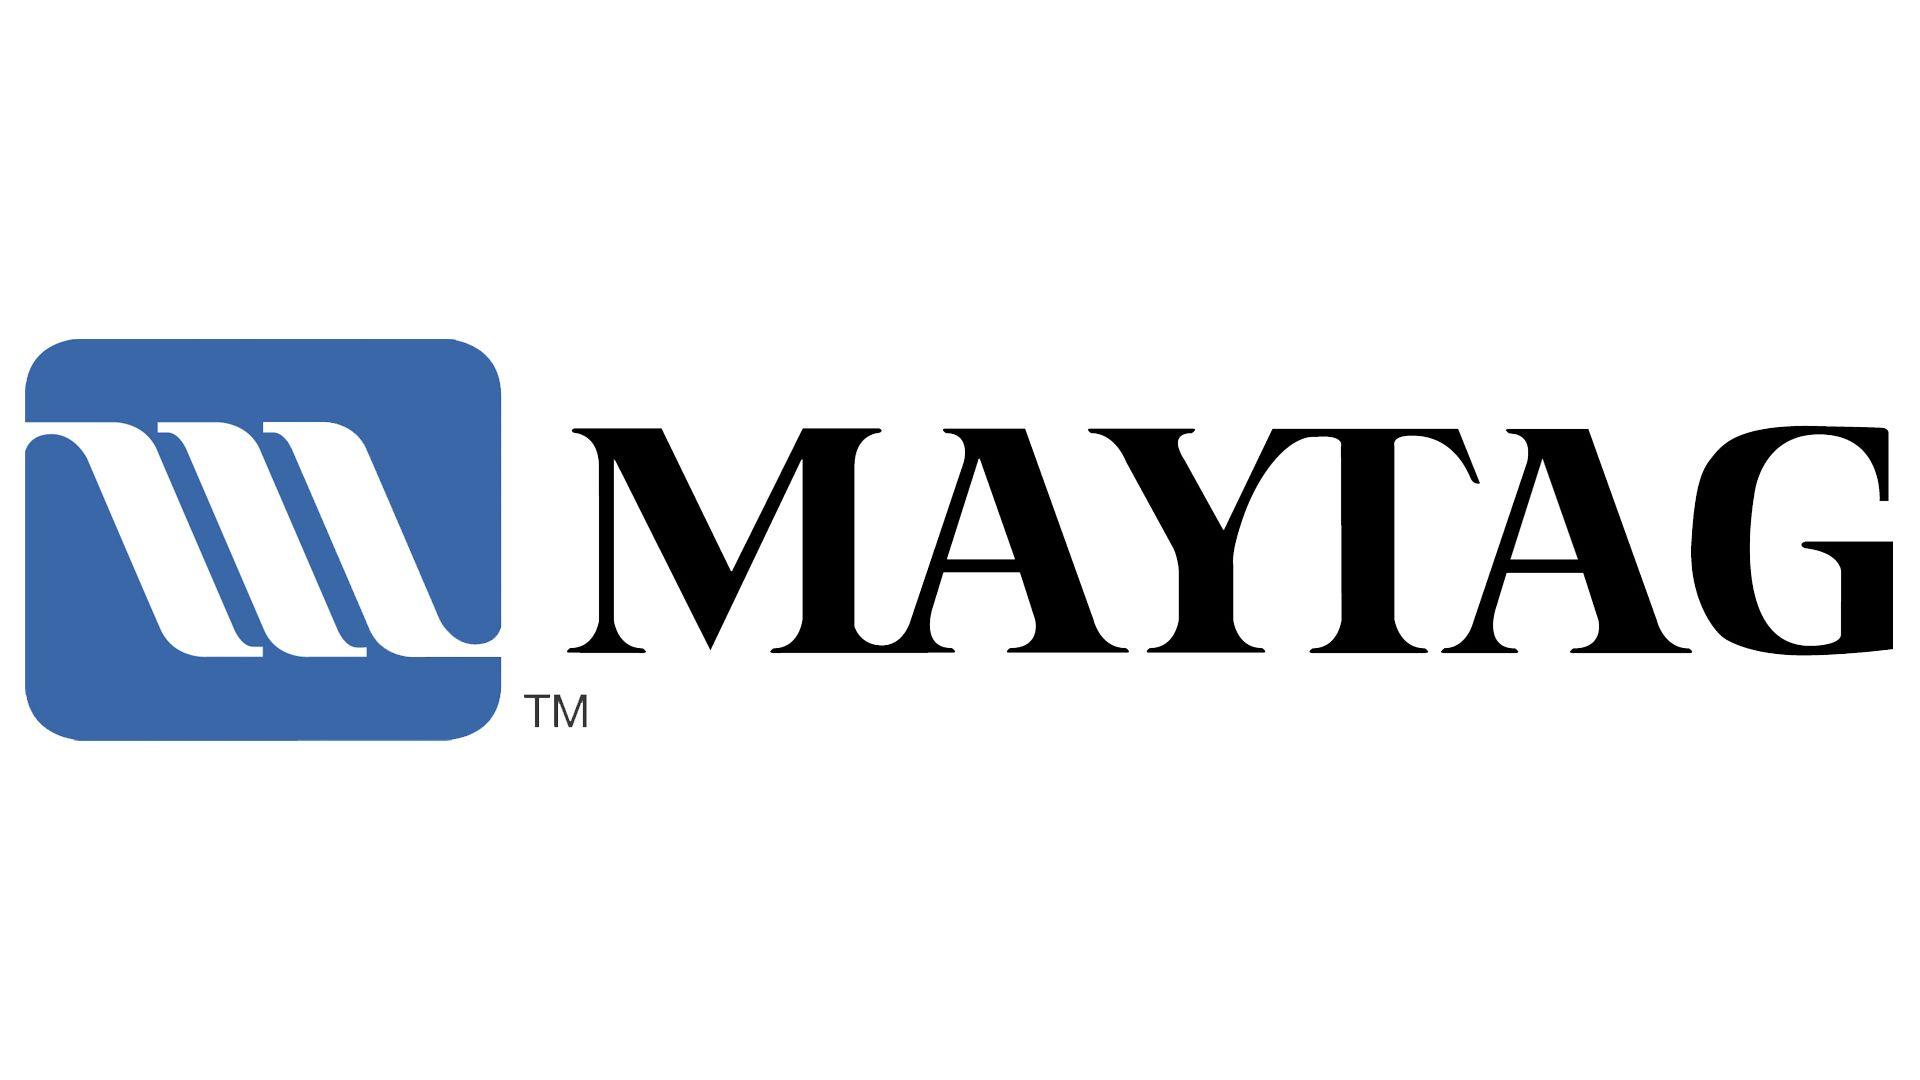 Maytag Logo - Maytag Logo, Maytag Symbol, Meaning, History and Evolution